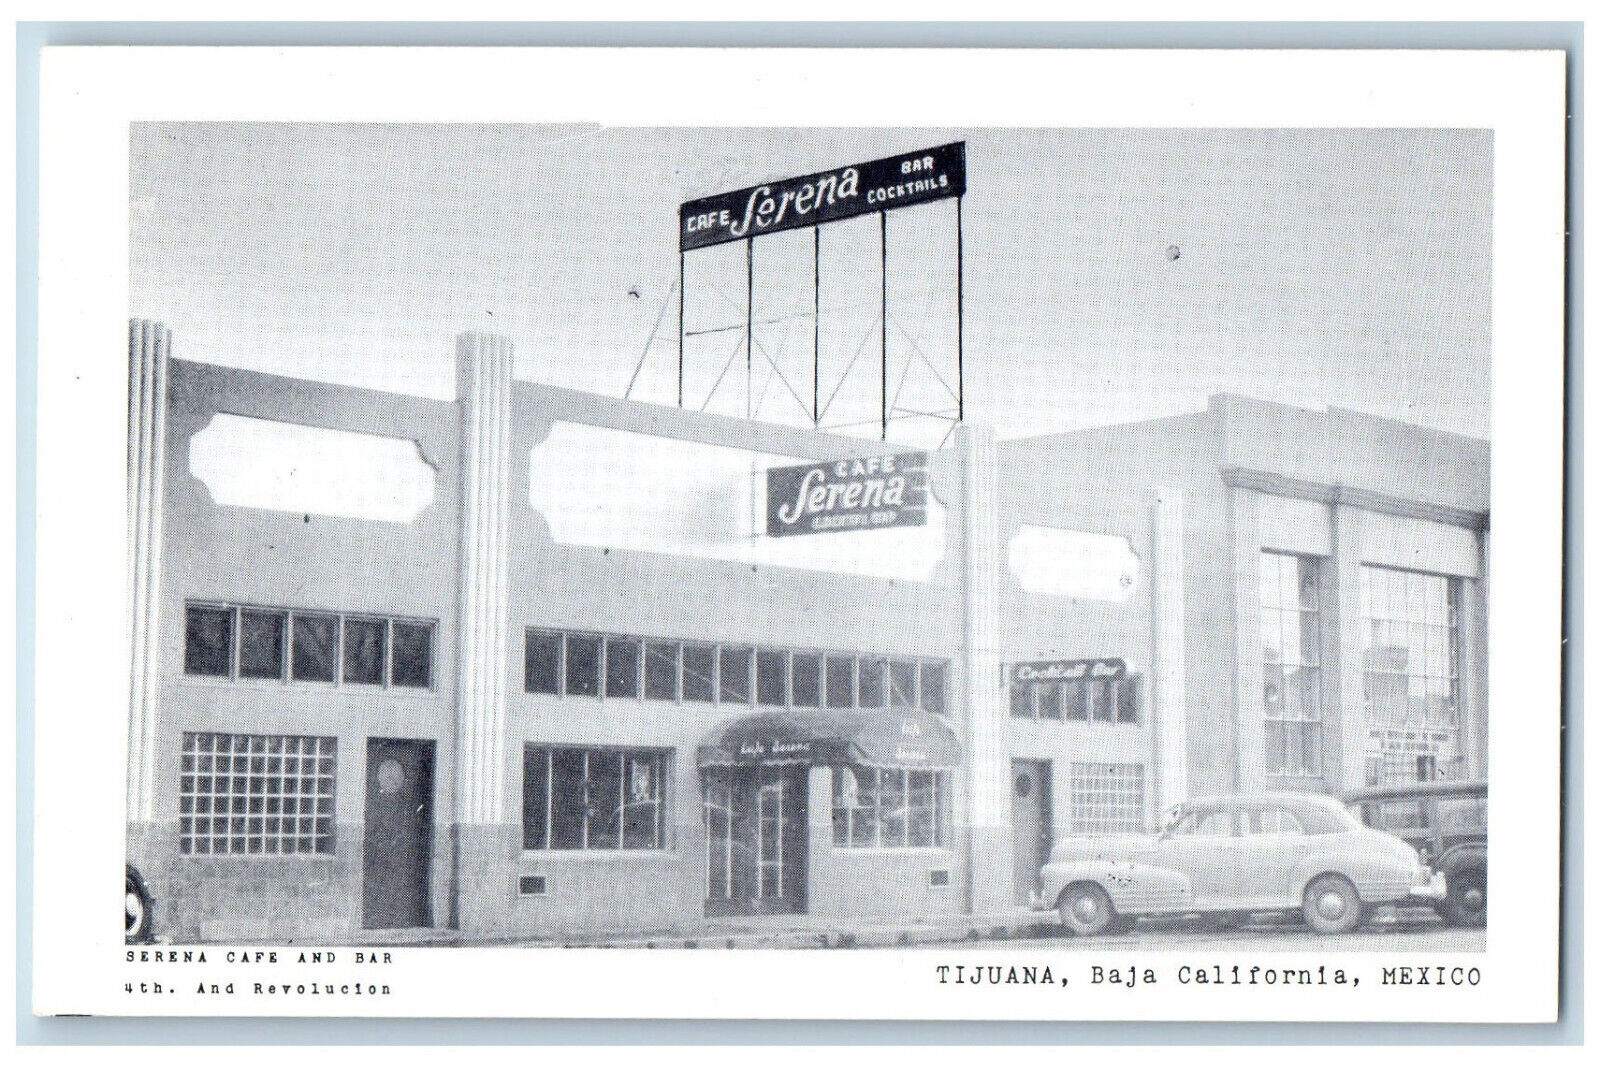 Tijuana Baja California Mexico Postcard Serena Cafe Bar 4th Revolucion c1950's